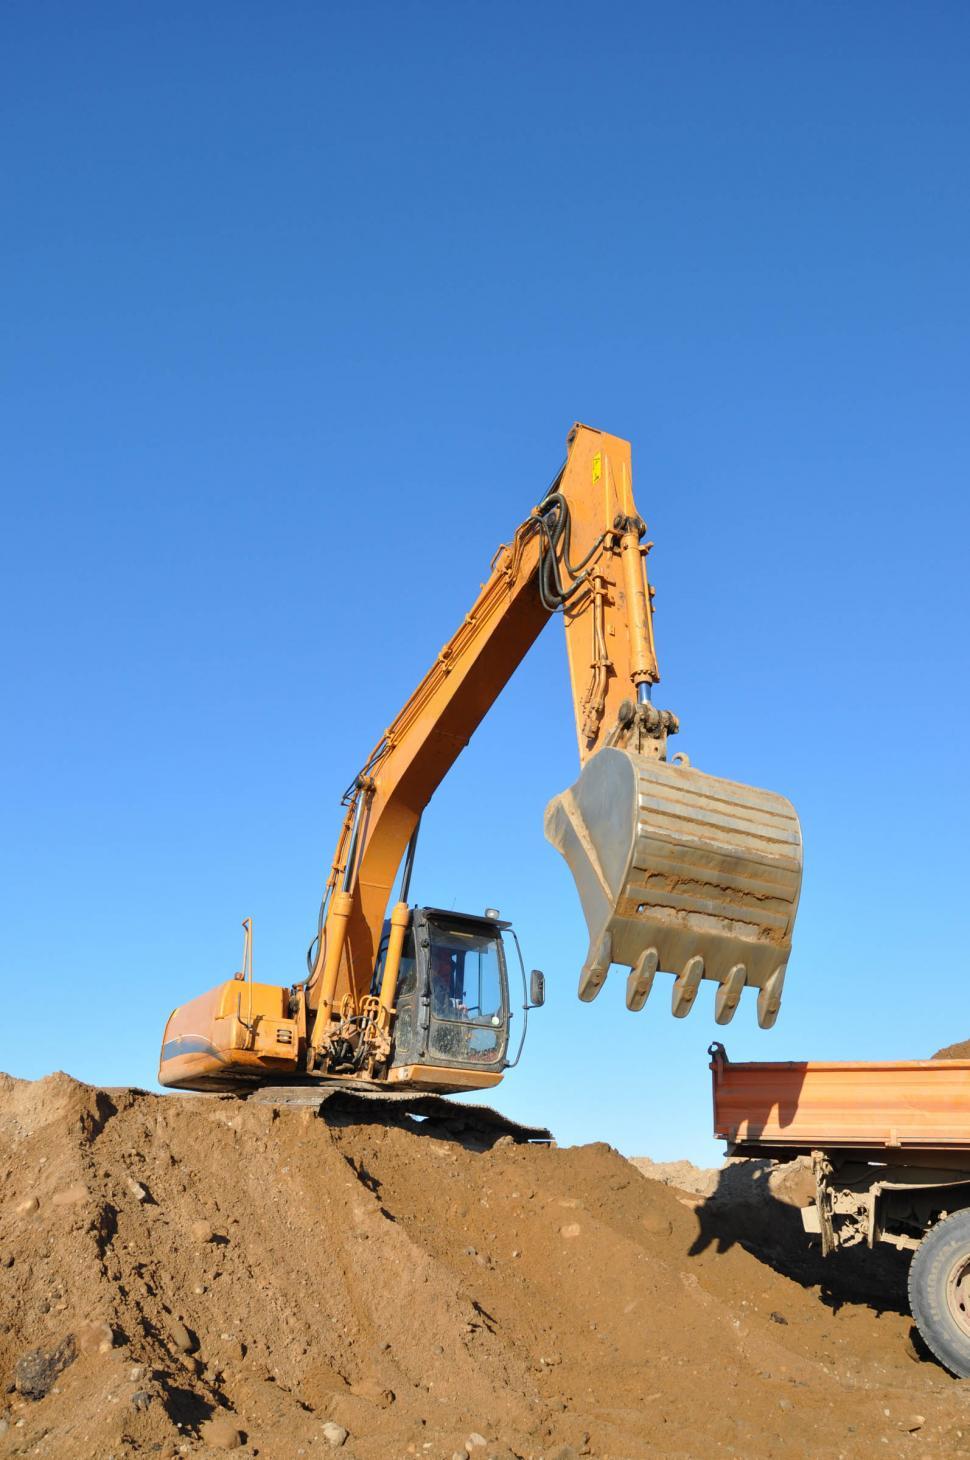 Free Image of Excavator on worksite 